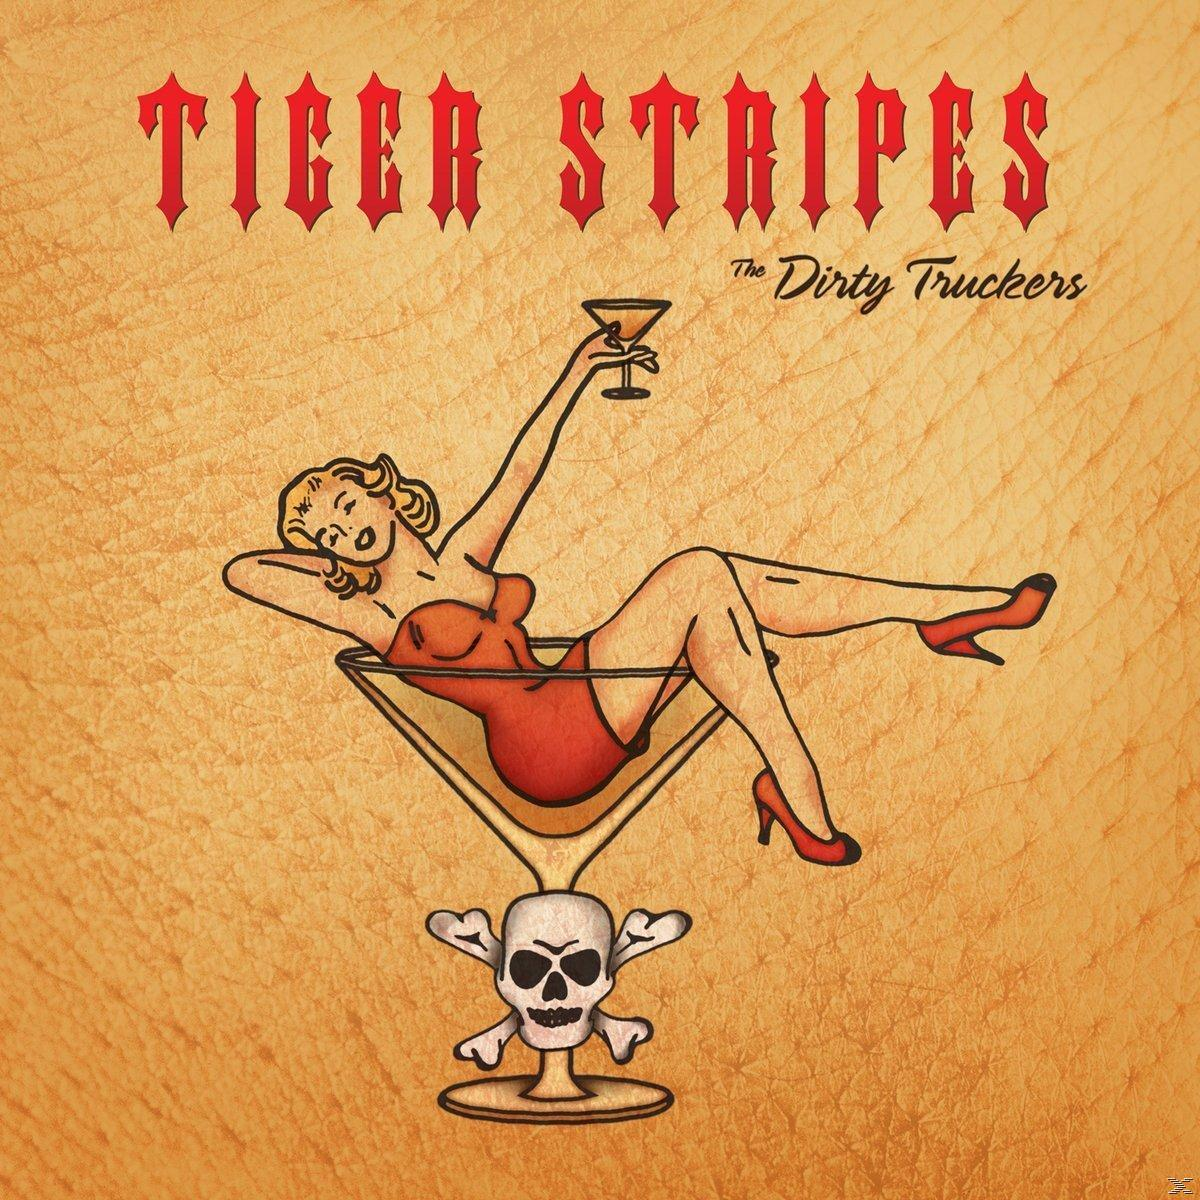 The Dirty Truckers - - TIGER (Vinyl) STRIPES (+DD)